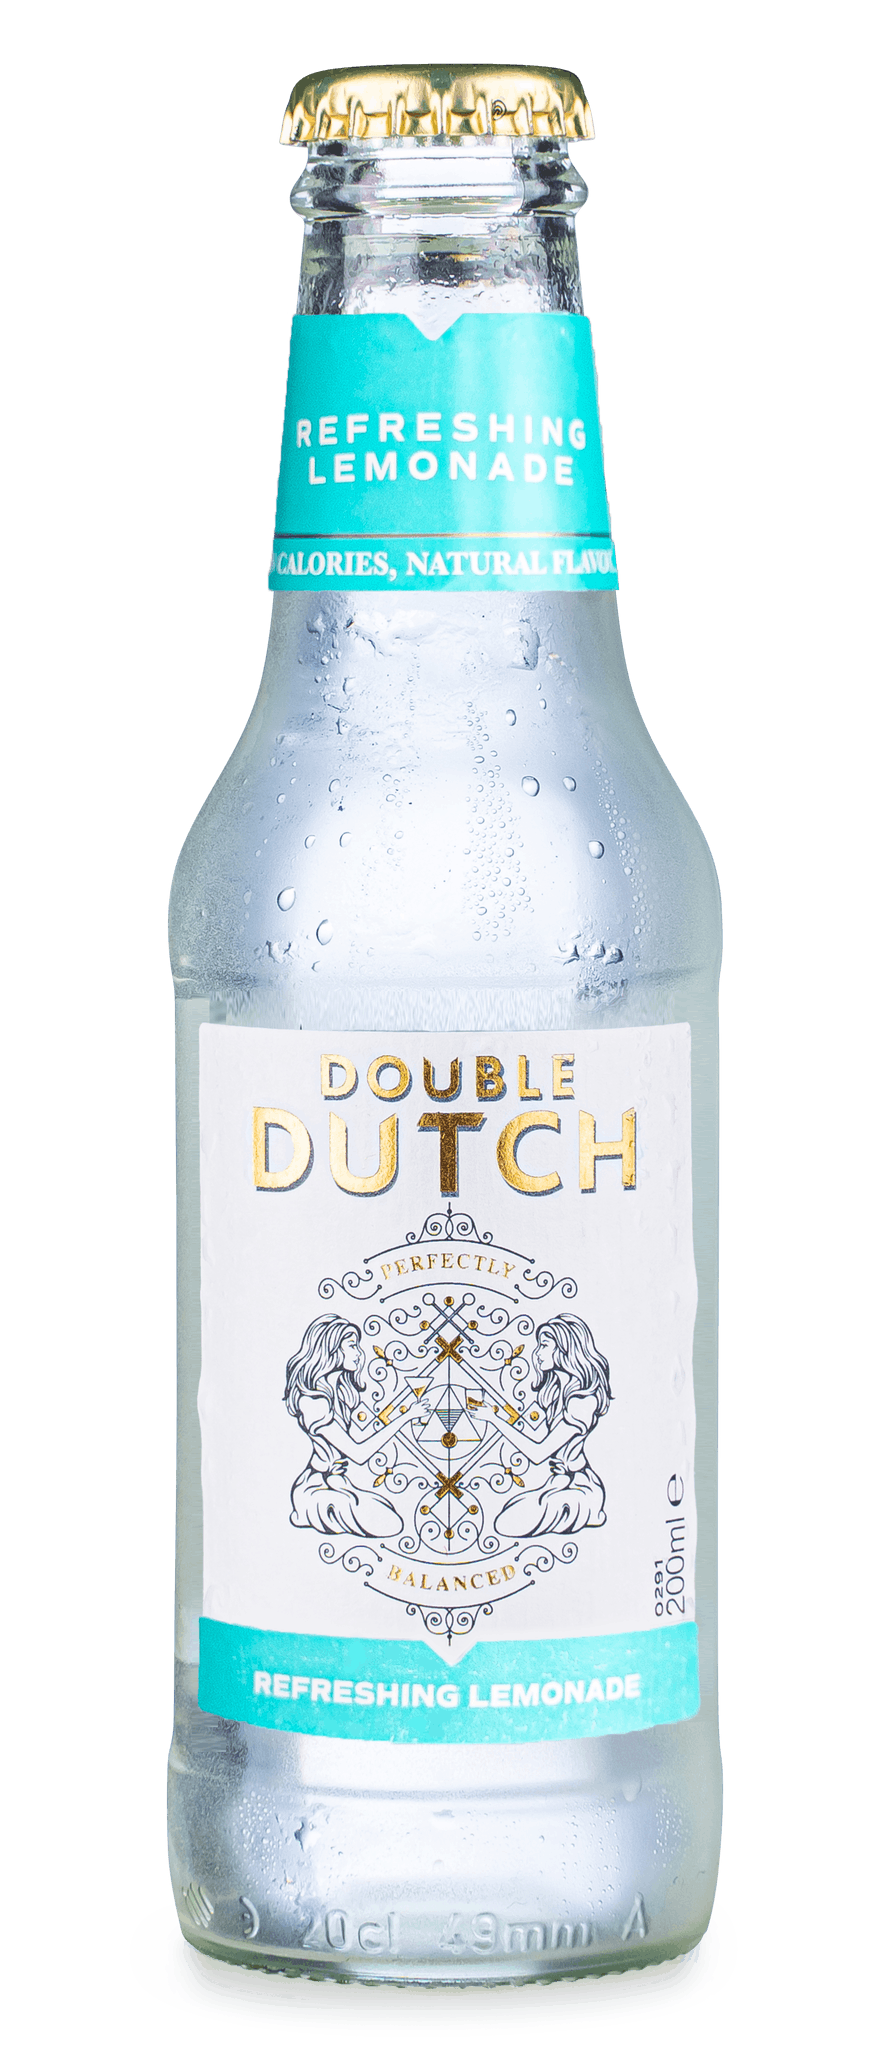 Refreshing Lemonade - Double Dutch